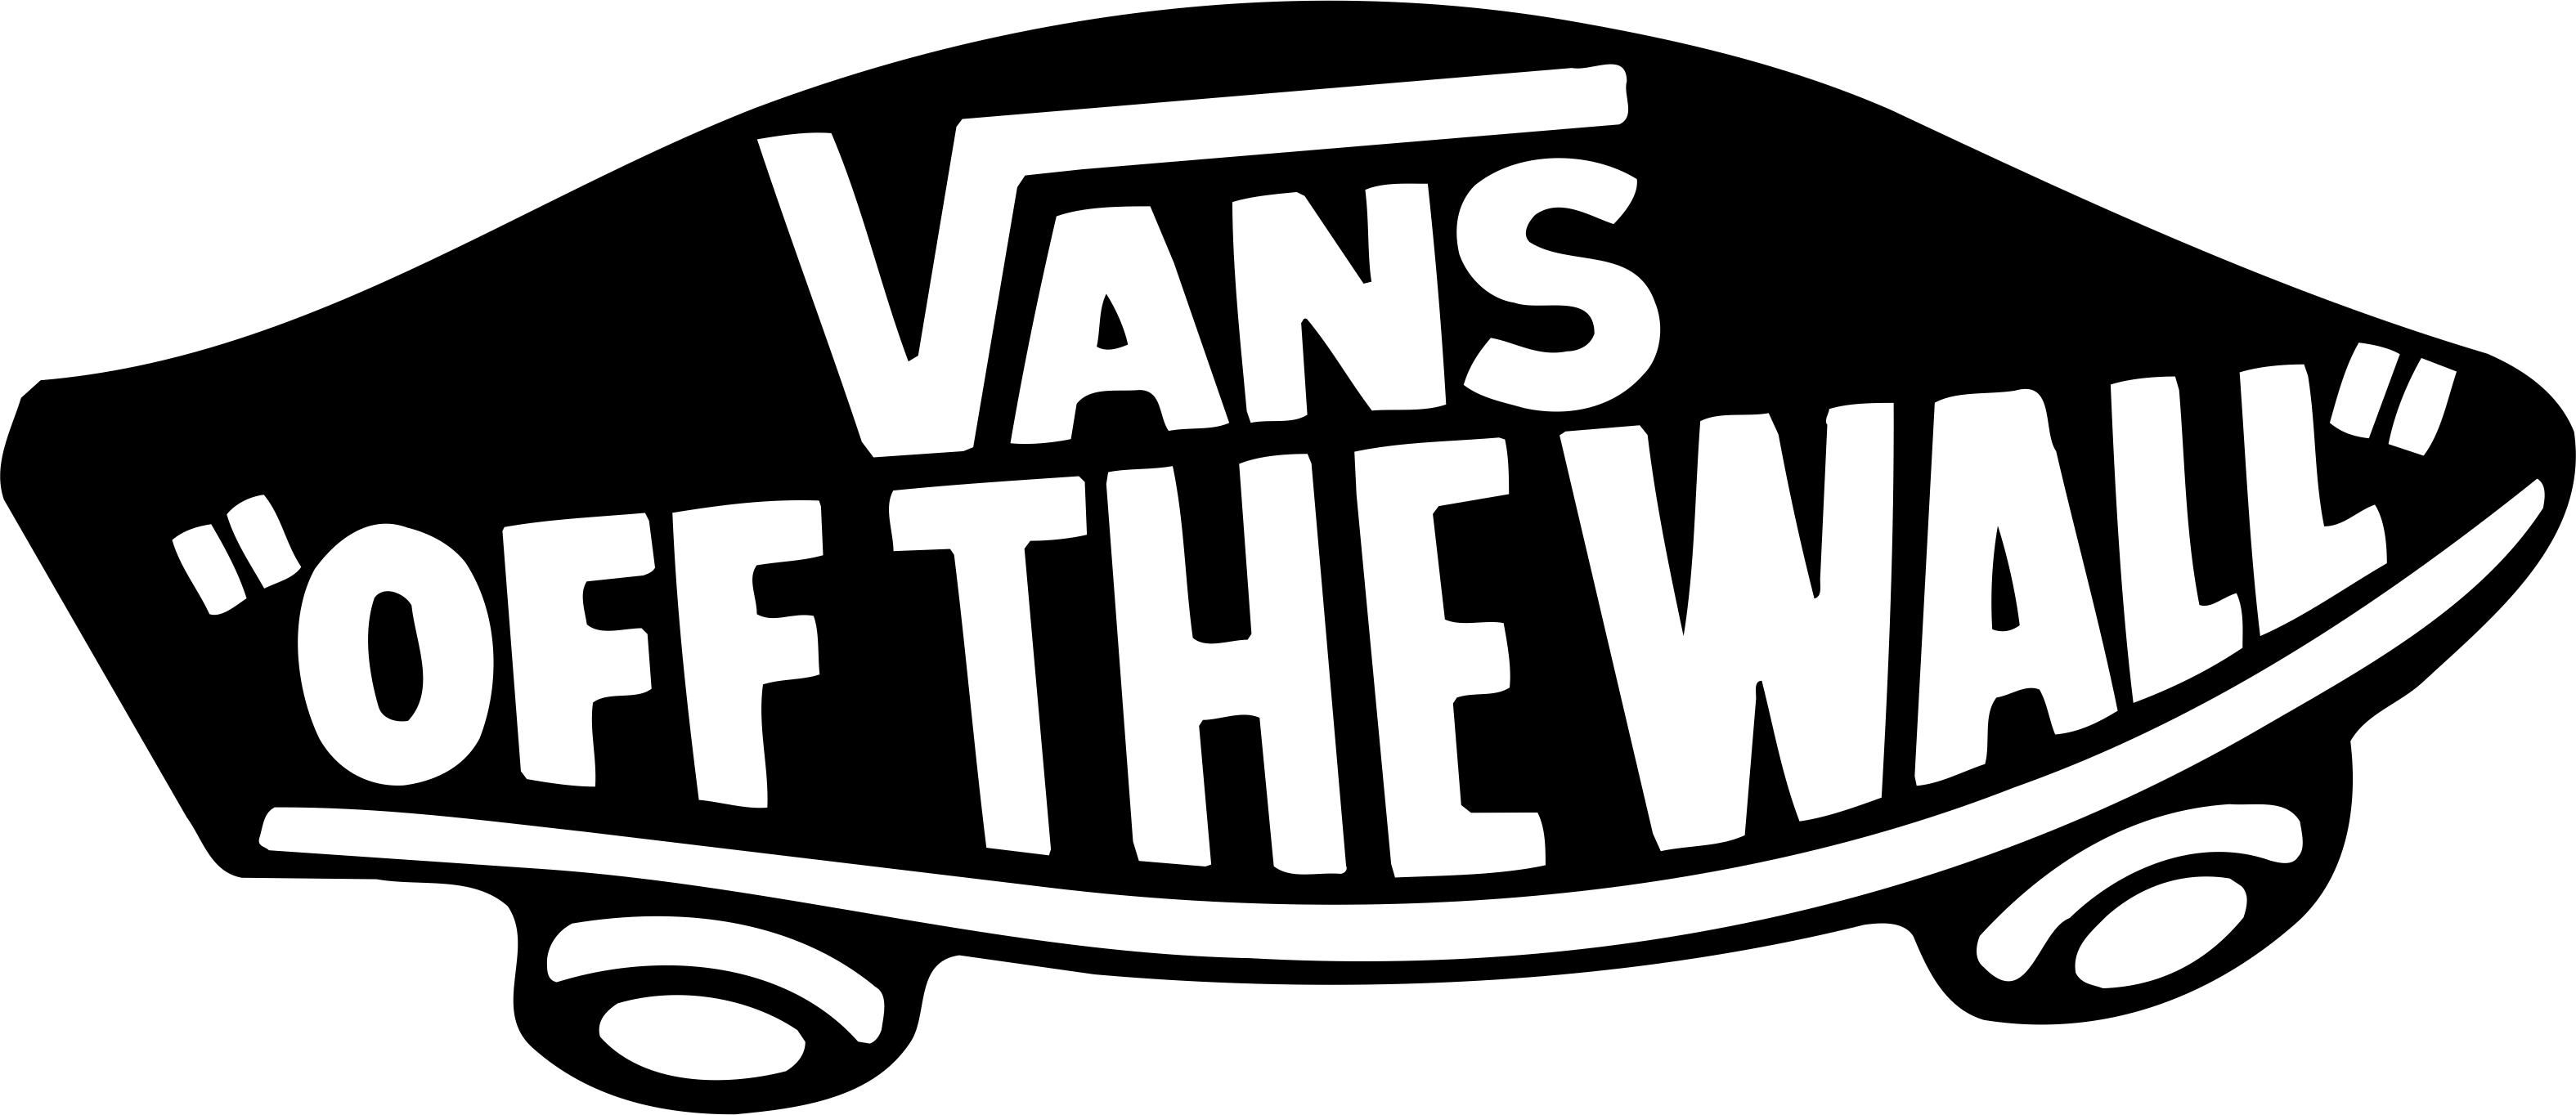 Free Download Vans Logo Wallpaper HD